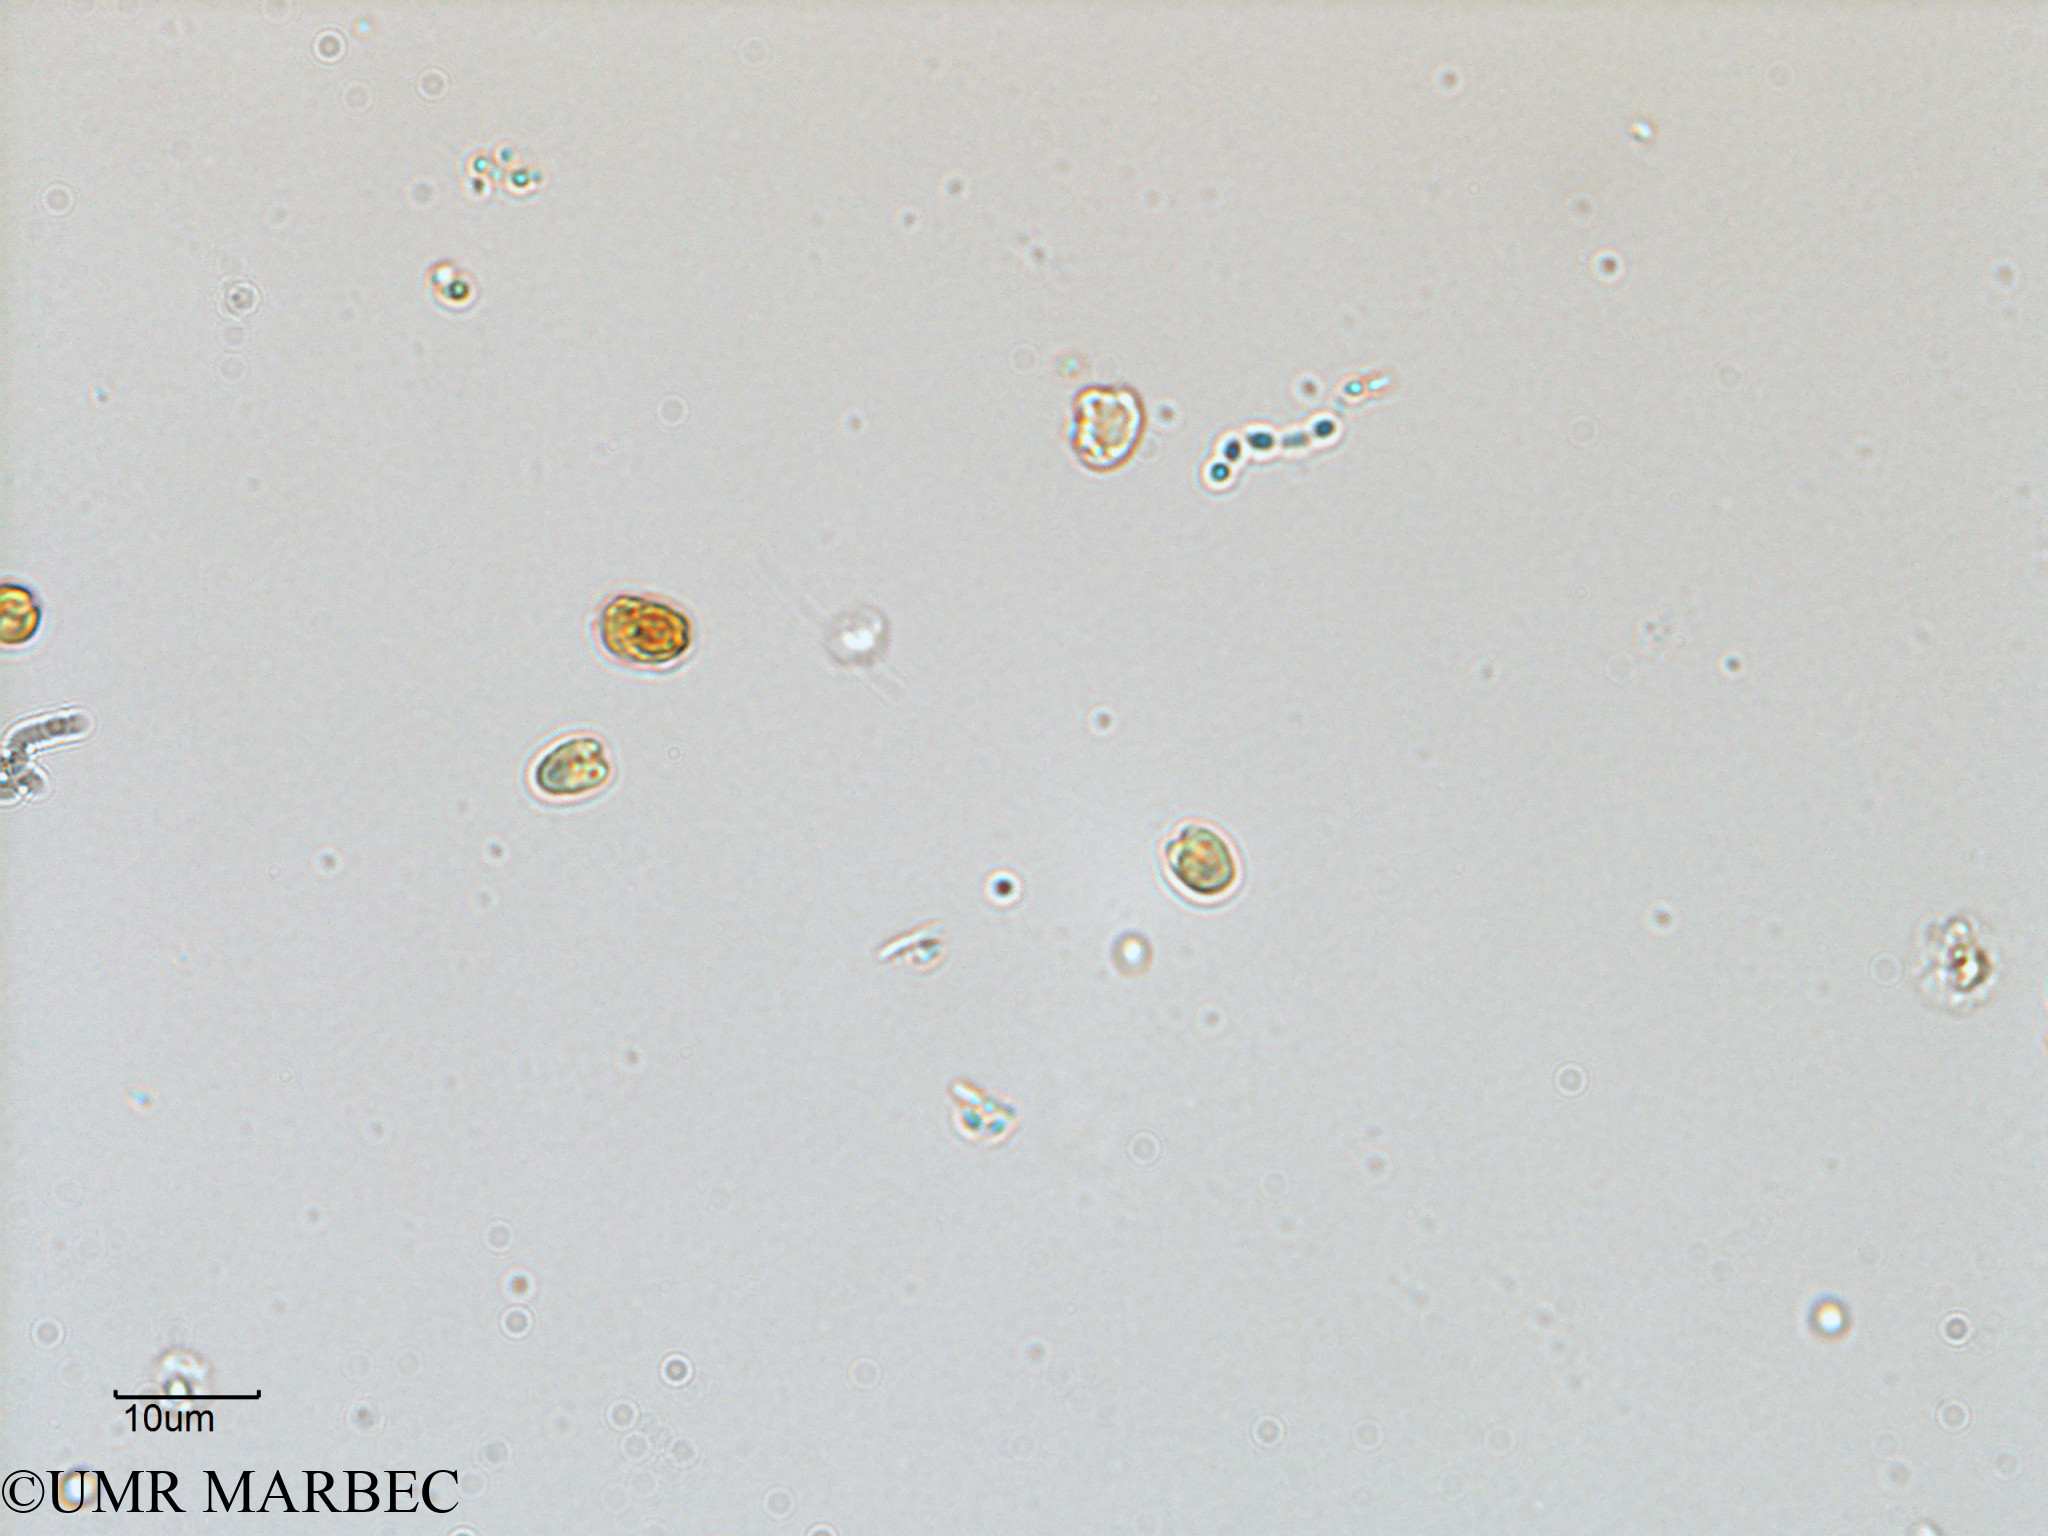 phyto/Scattered_Islands/juan_de_nova/COMMA2 November 2013/Nanoflagellé 9 (ancien Flagellé 2-3).tif(copy).jpg